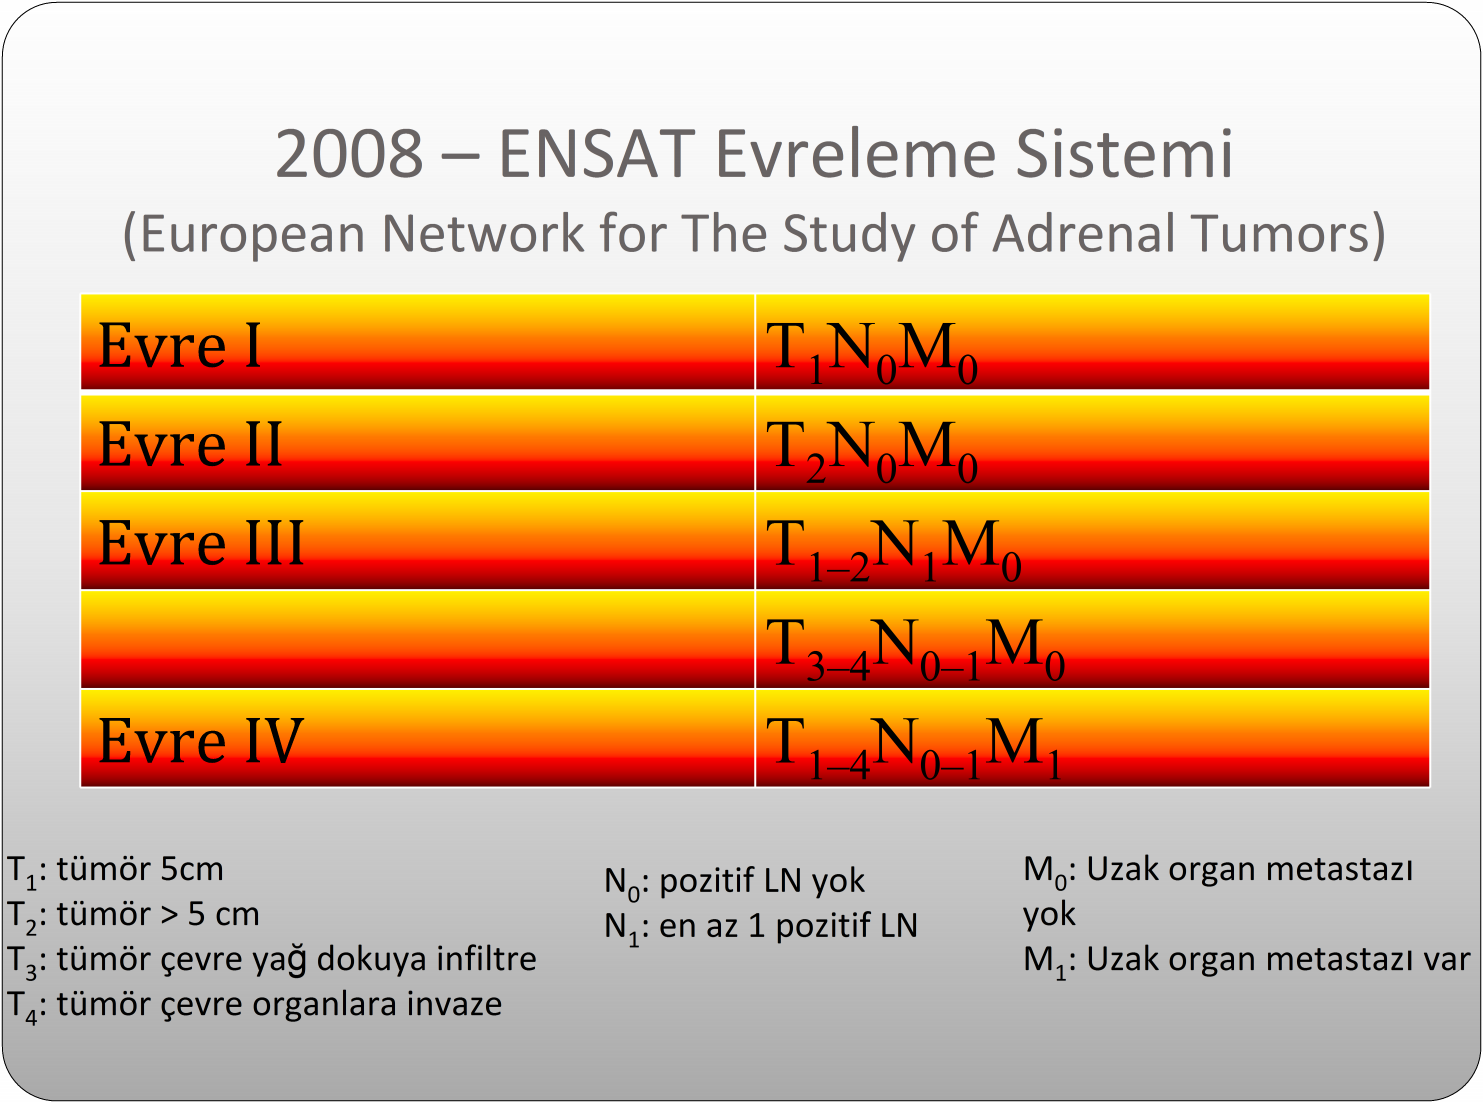 2008 ENSAT Evreleme Sistemi (European Network for The Study of Adrenal Tumors) Evre I Evre II Evre III Evre IV T1: tümör 5cm T2: tümör > 5 cm T3: tümör çevre yağ dokuya infiltre